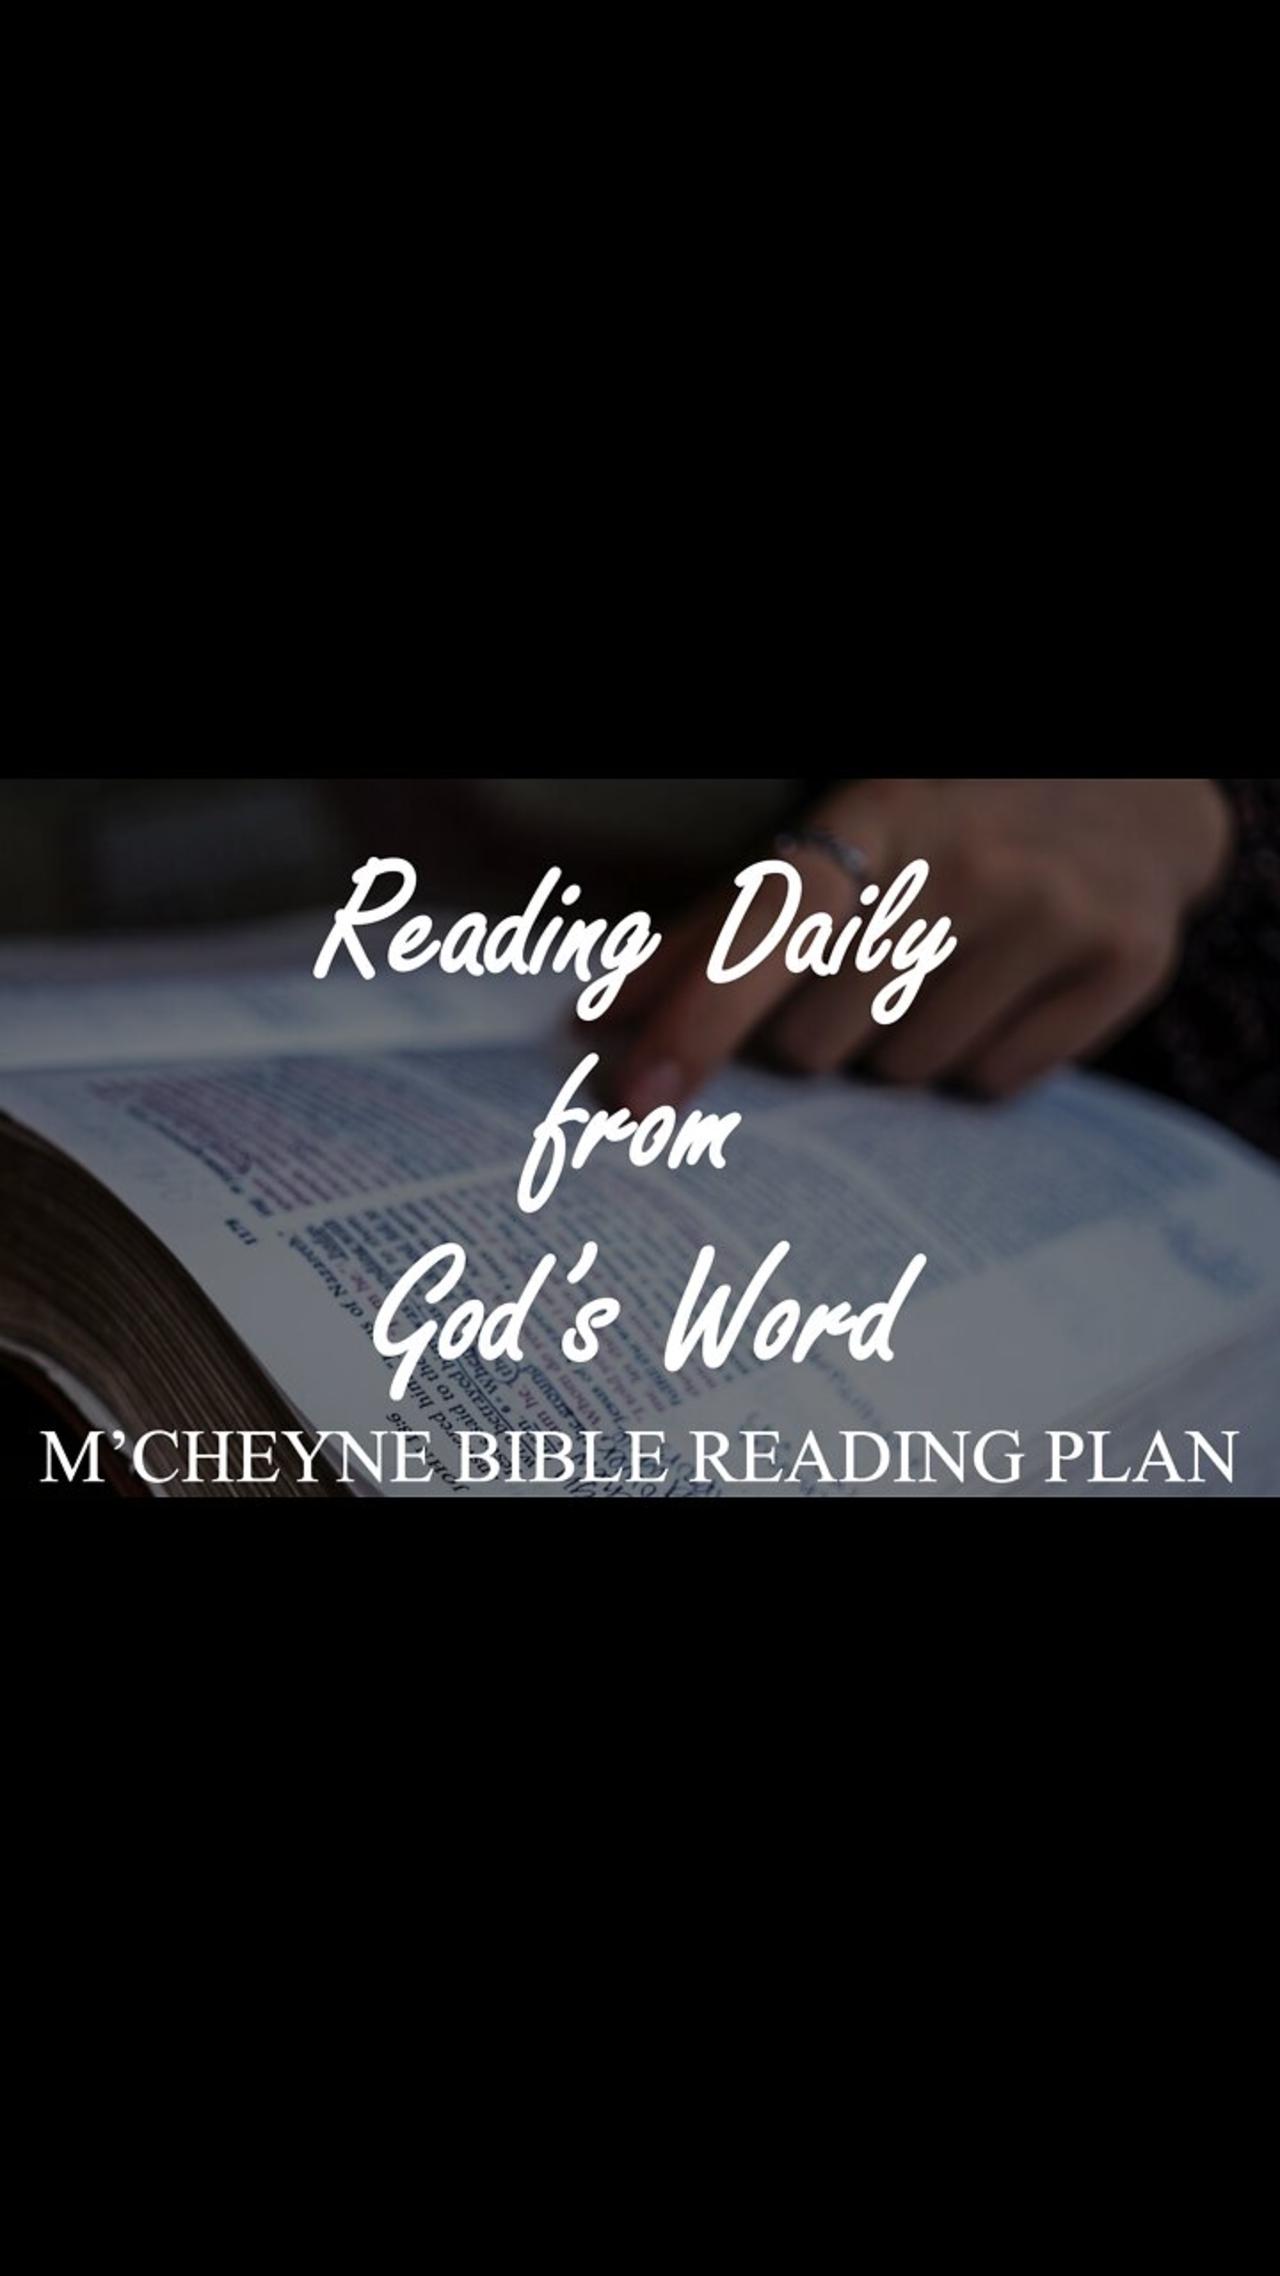 M’CHEYNE BIBLE READING PLAN - August 29